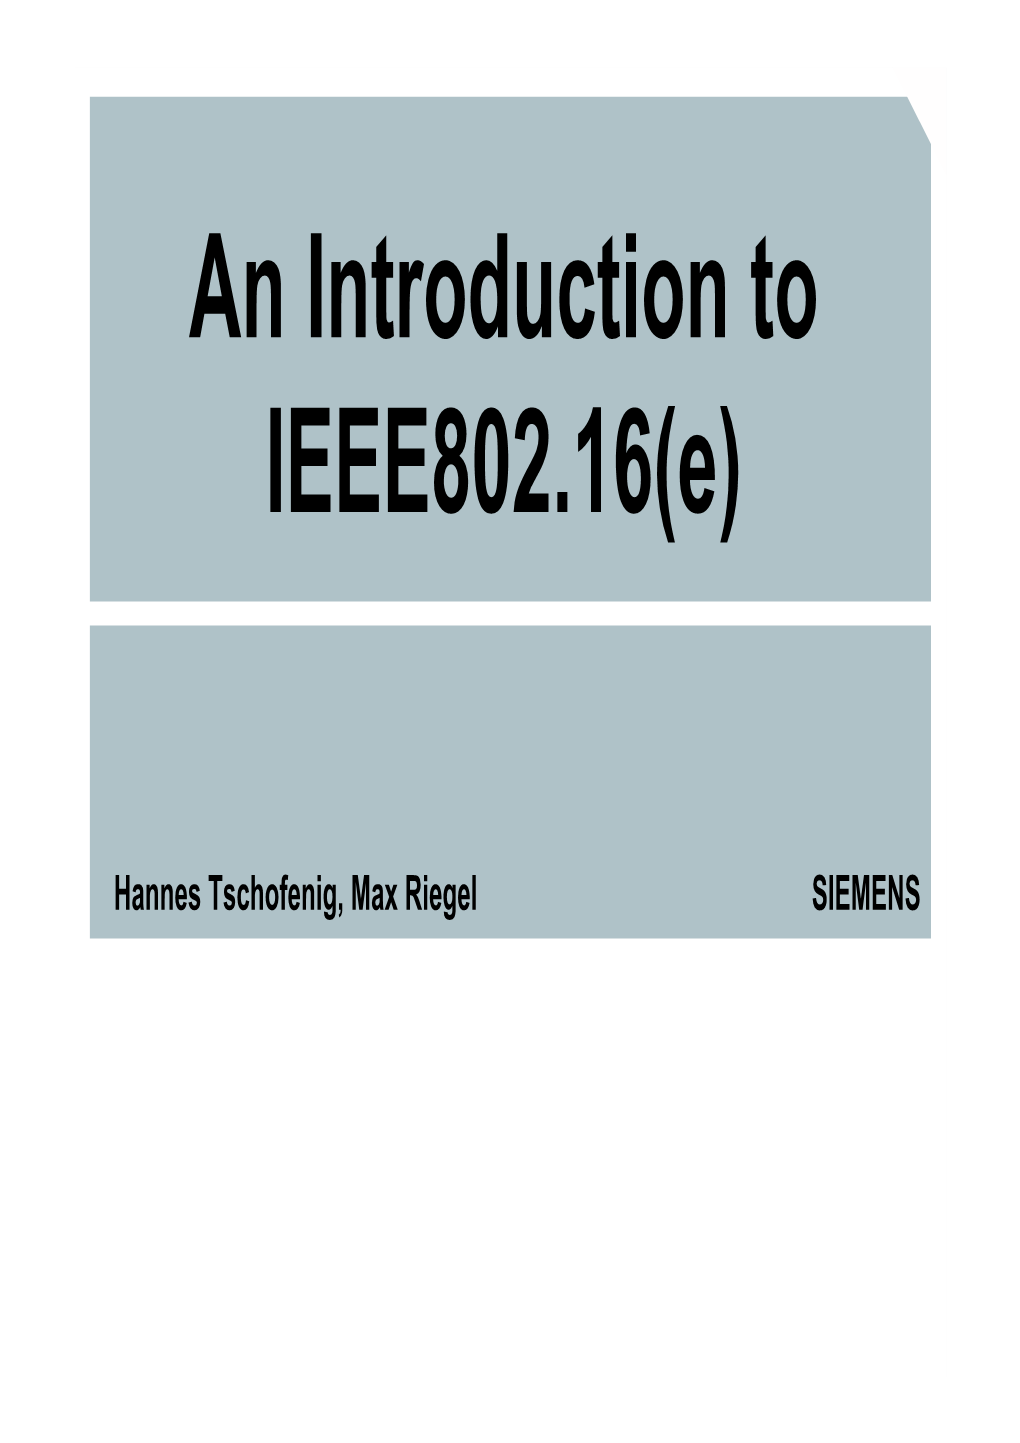 IEEE 802.16E